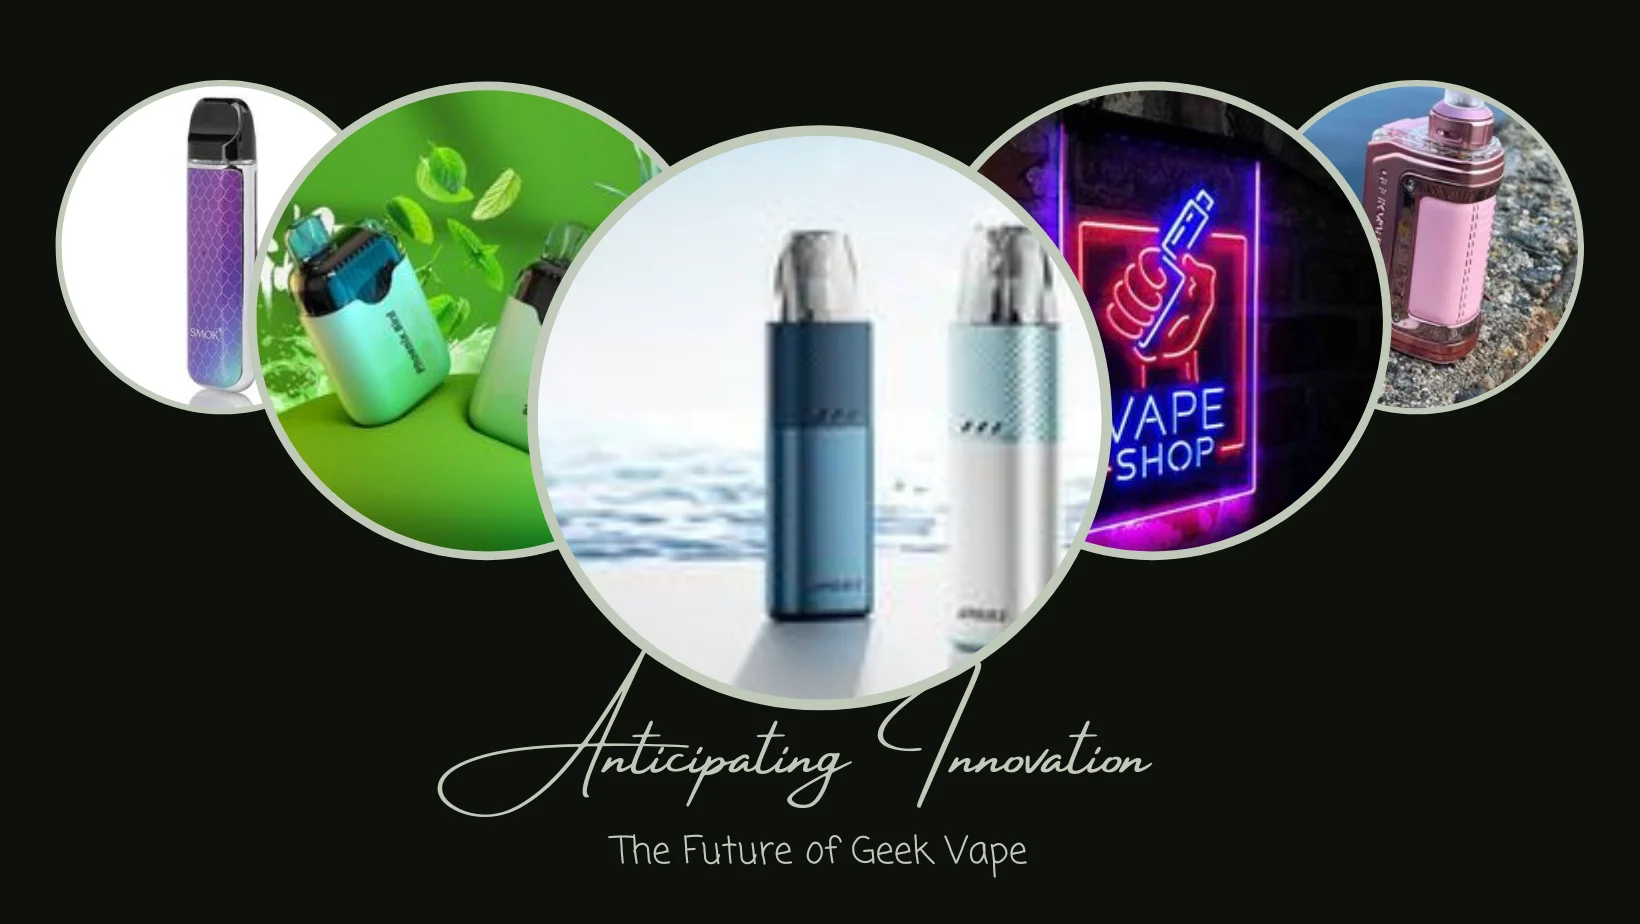 The Future of Geek Vape: Anticipating Innovation